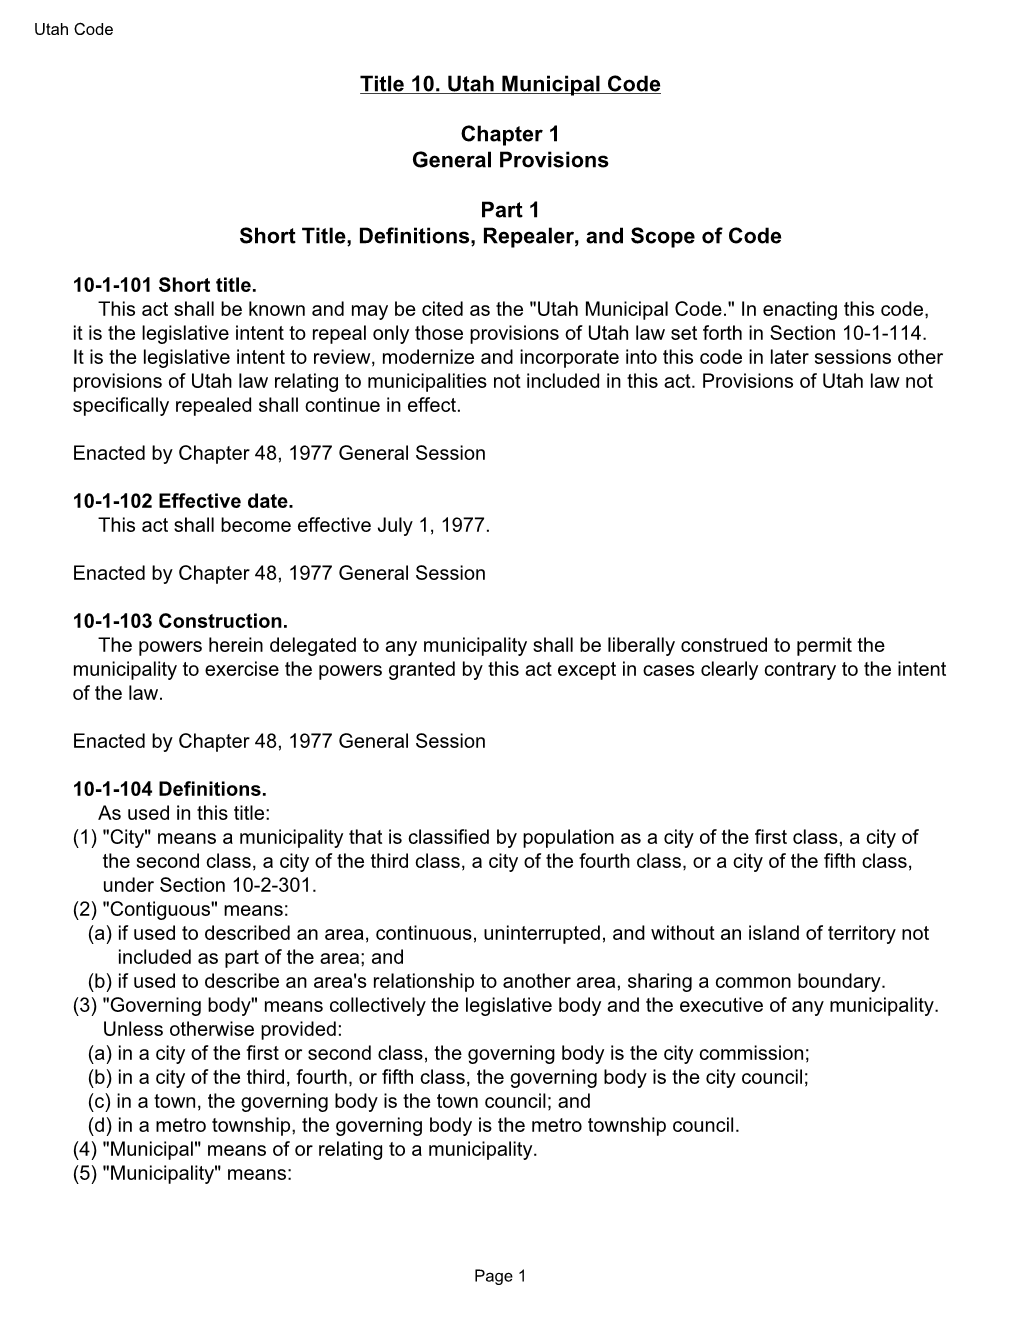 Title 10. Utah Municipal Code Chapter 1 General Provisions Part 1 Short